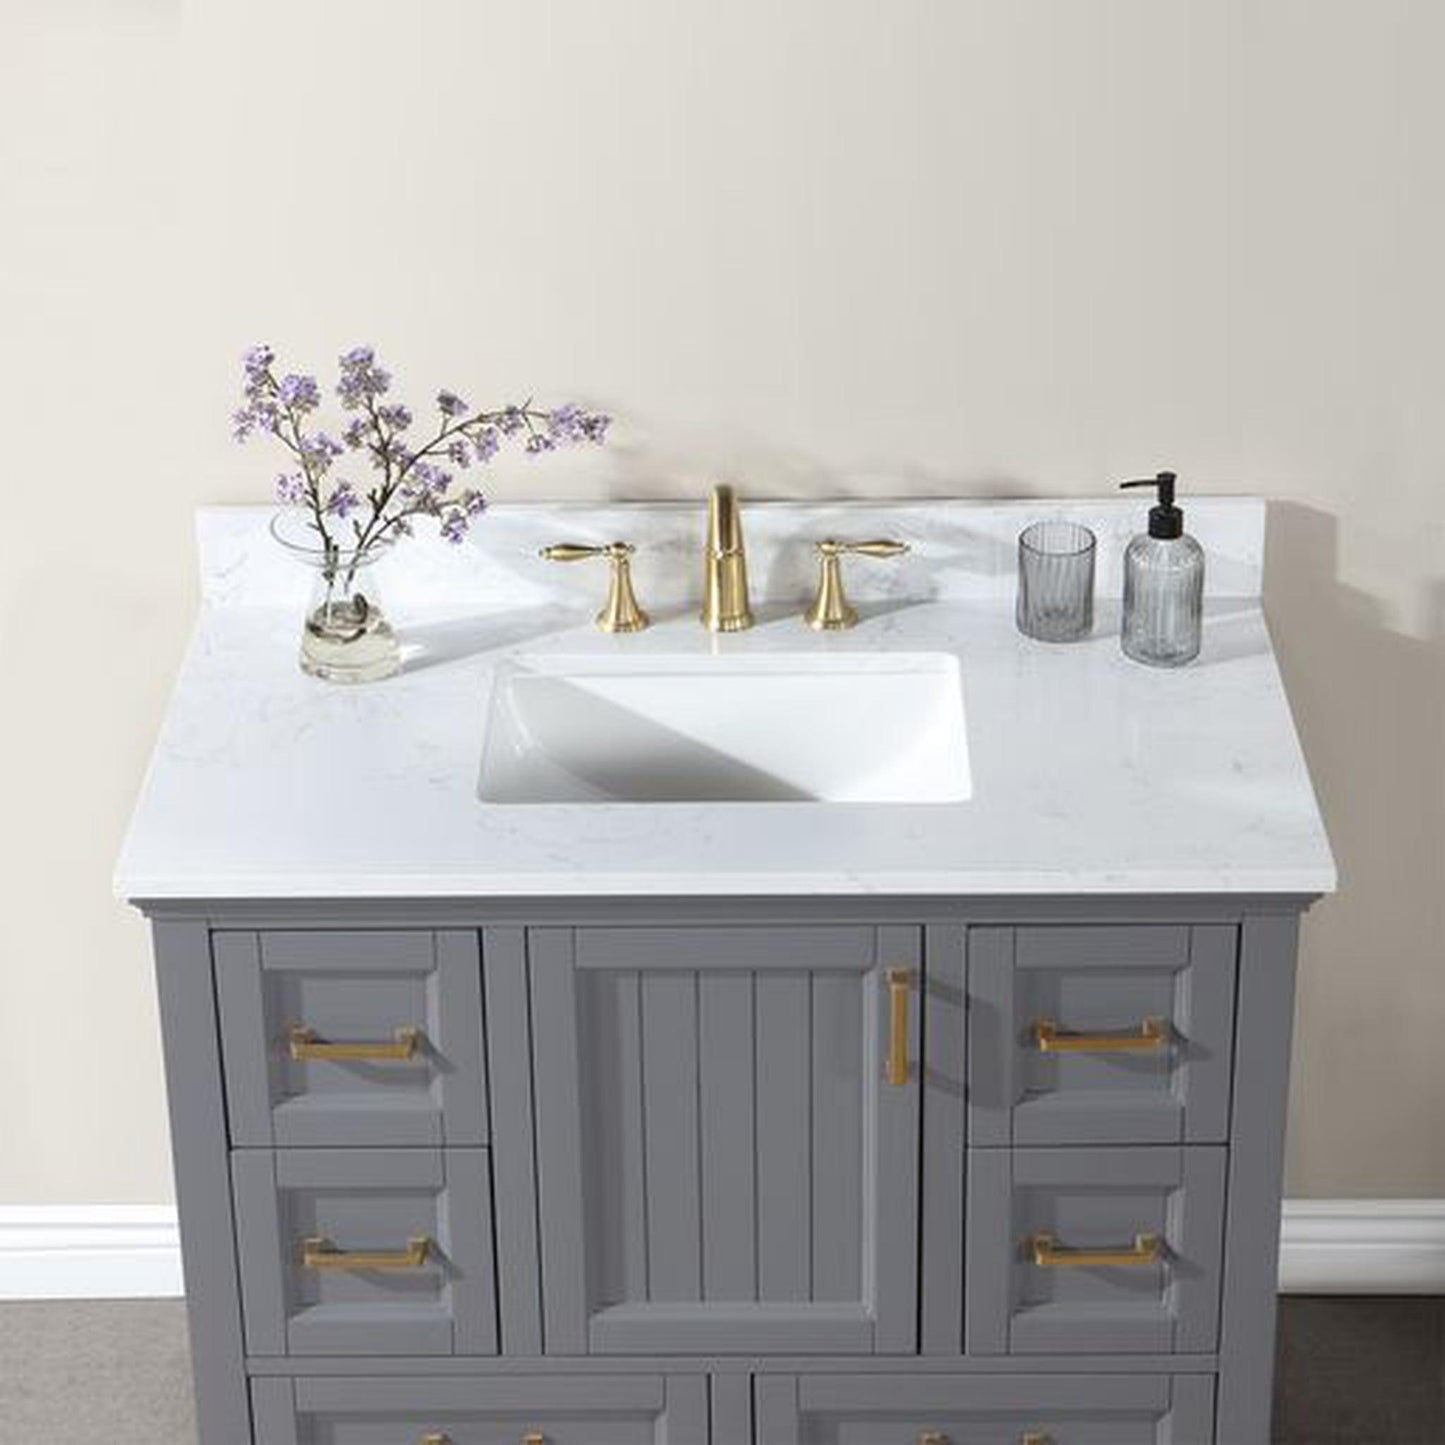 Altair Isla 42" Single Gray Freestanding Bathroom Vanity Set With Aosta White Composite Stone Top, Rectangular Undermount Ceramic Sink, and Overflow